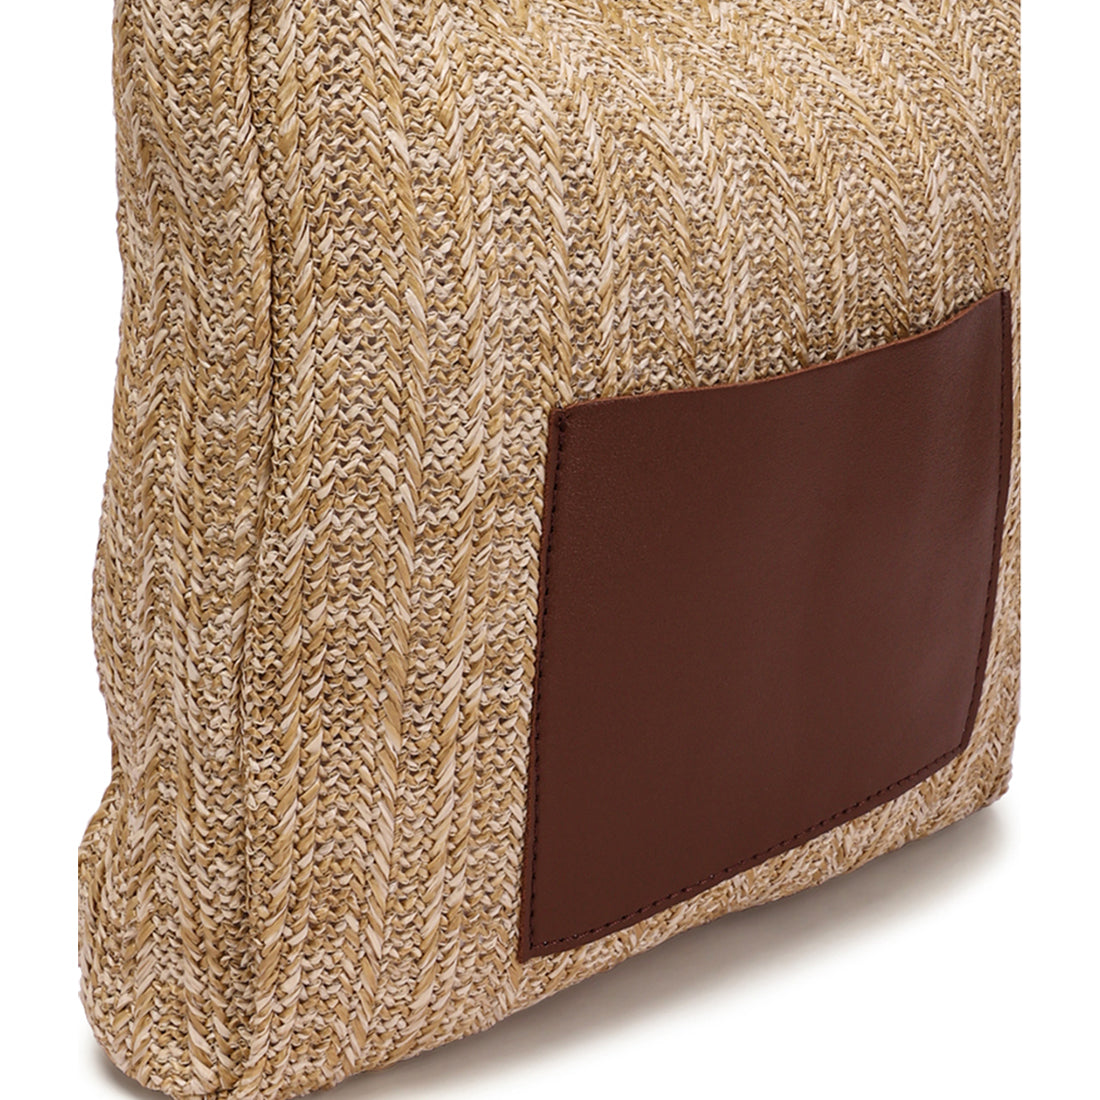 the boho tote bag#color_brown